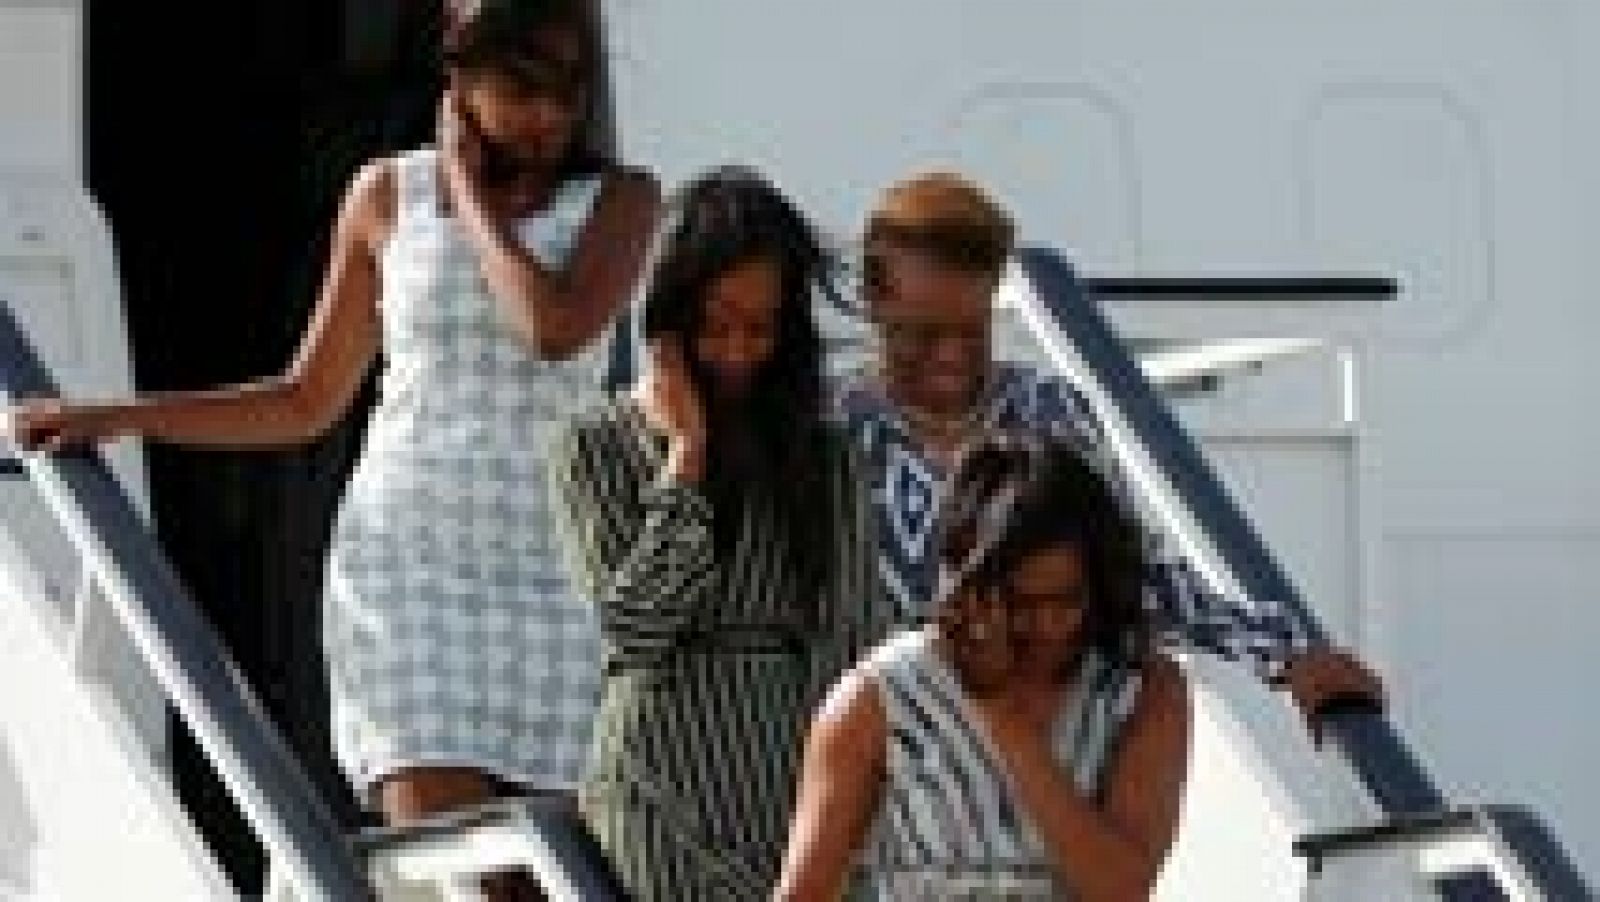 Telediario 1: Michelle Obama llega a España donde se reunirá con la reina por su causa solidaria | RTVE Play